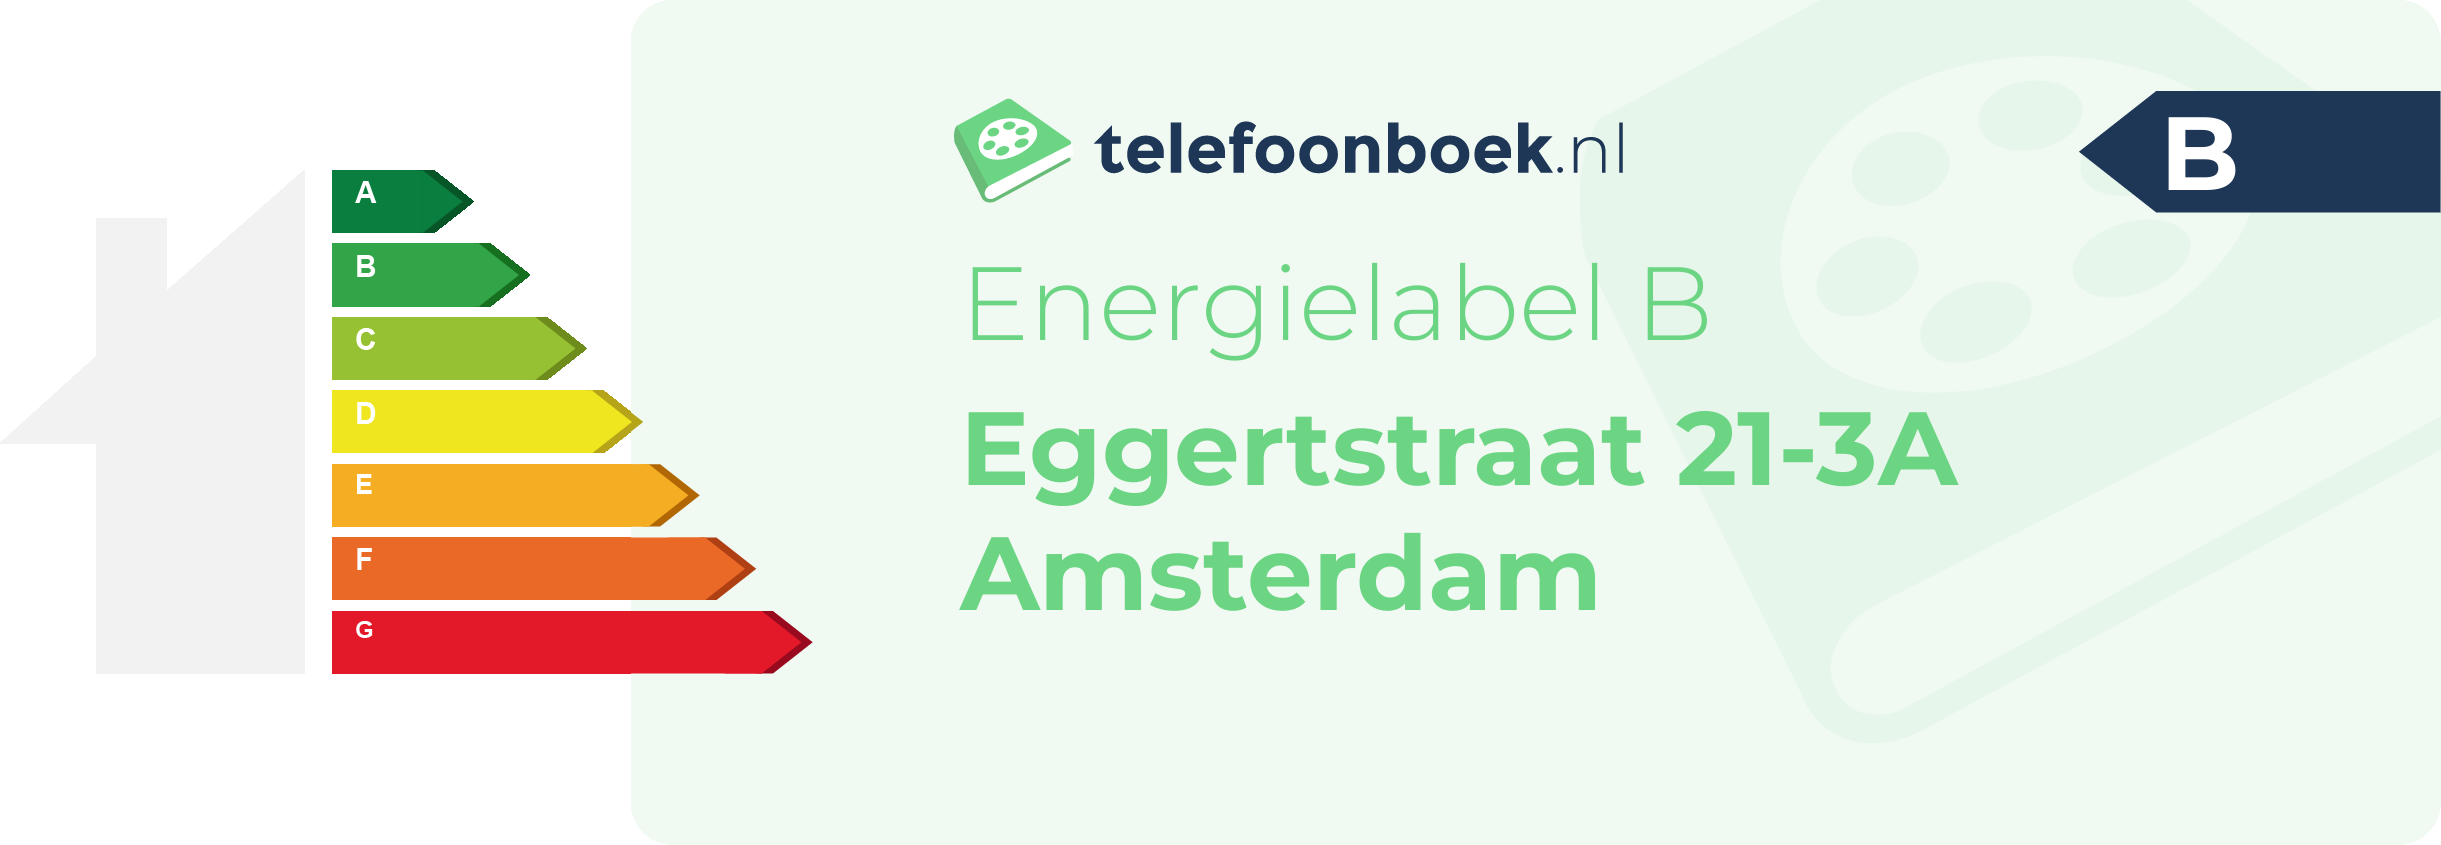 Energielabel Eggertstraat 21-3A Amsterdam